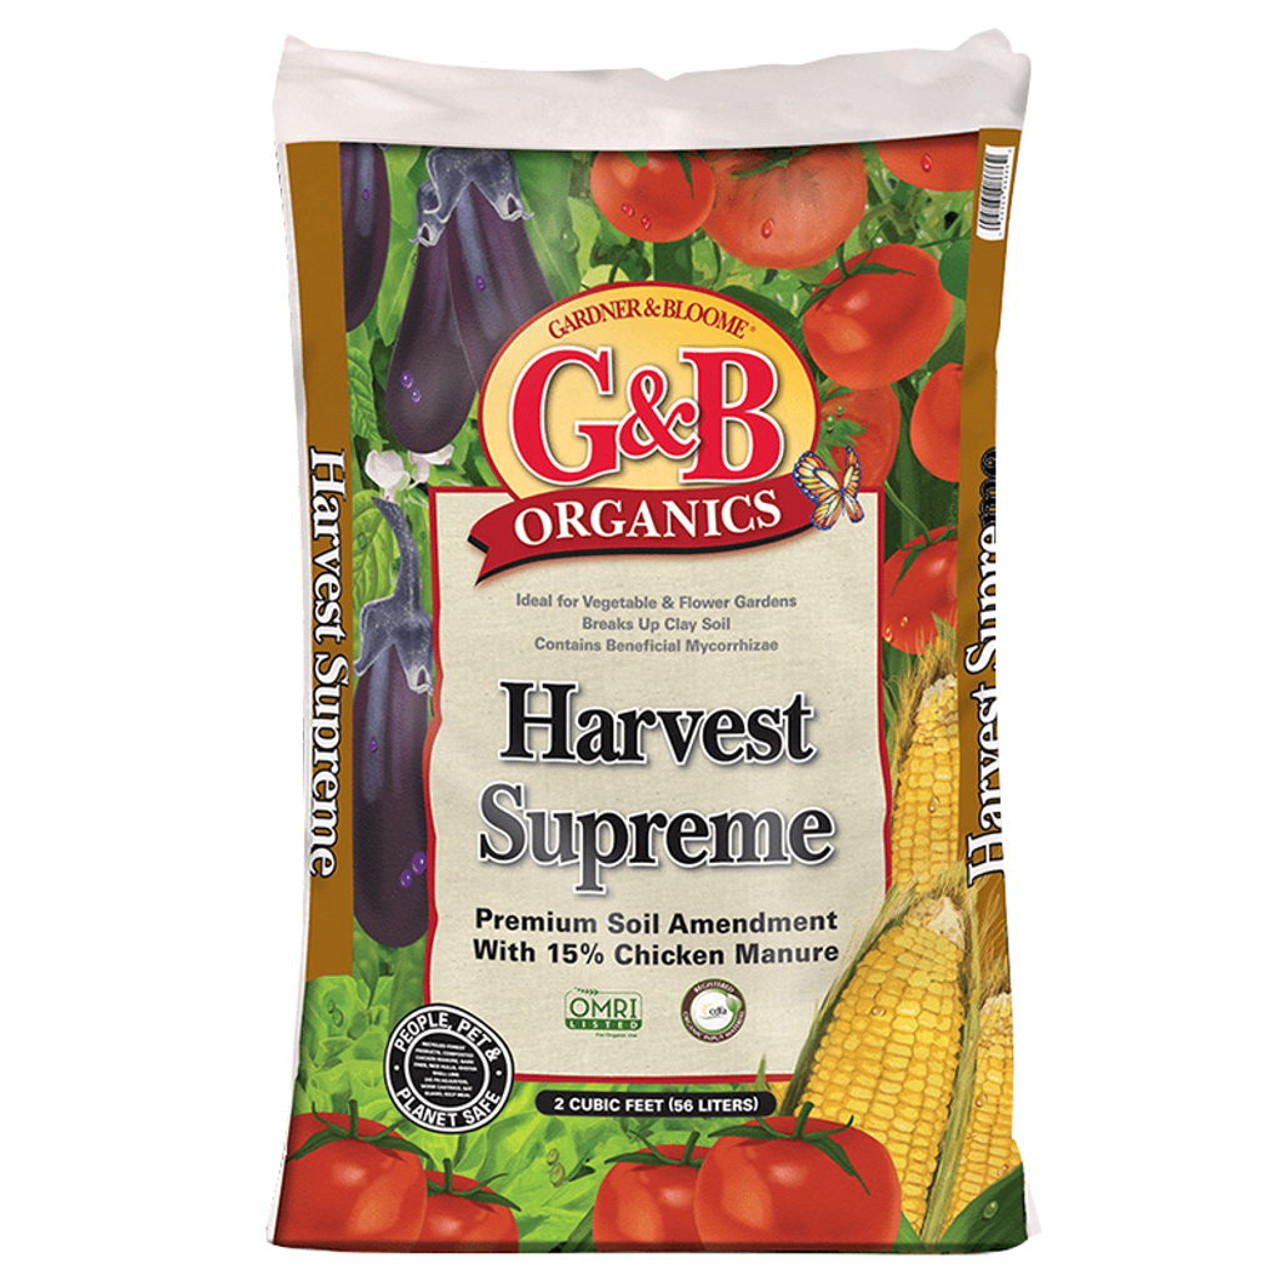 Image of Bag of G&B Harvest Supreme soil amendment